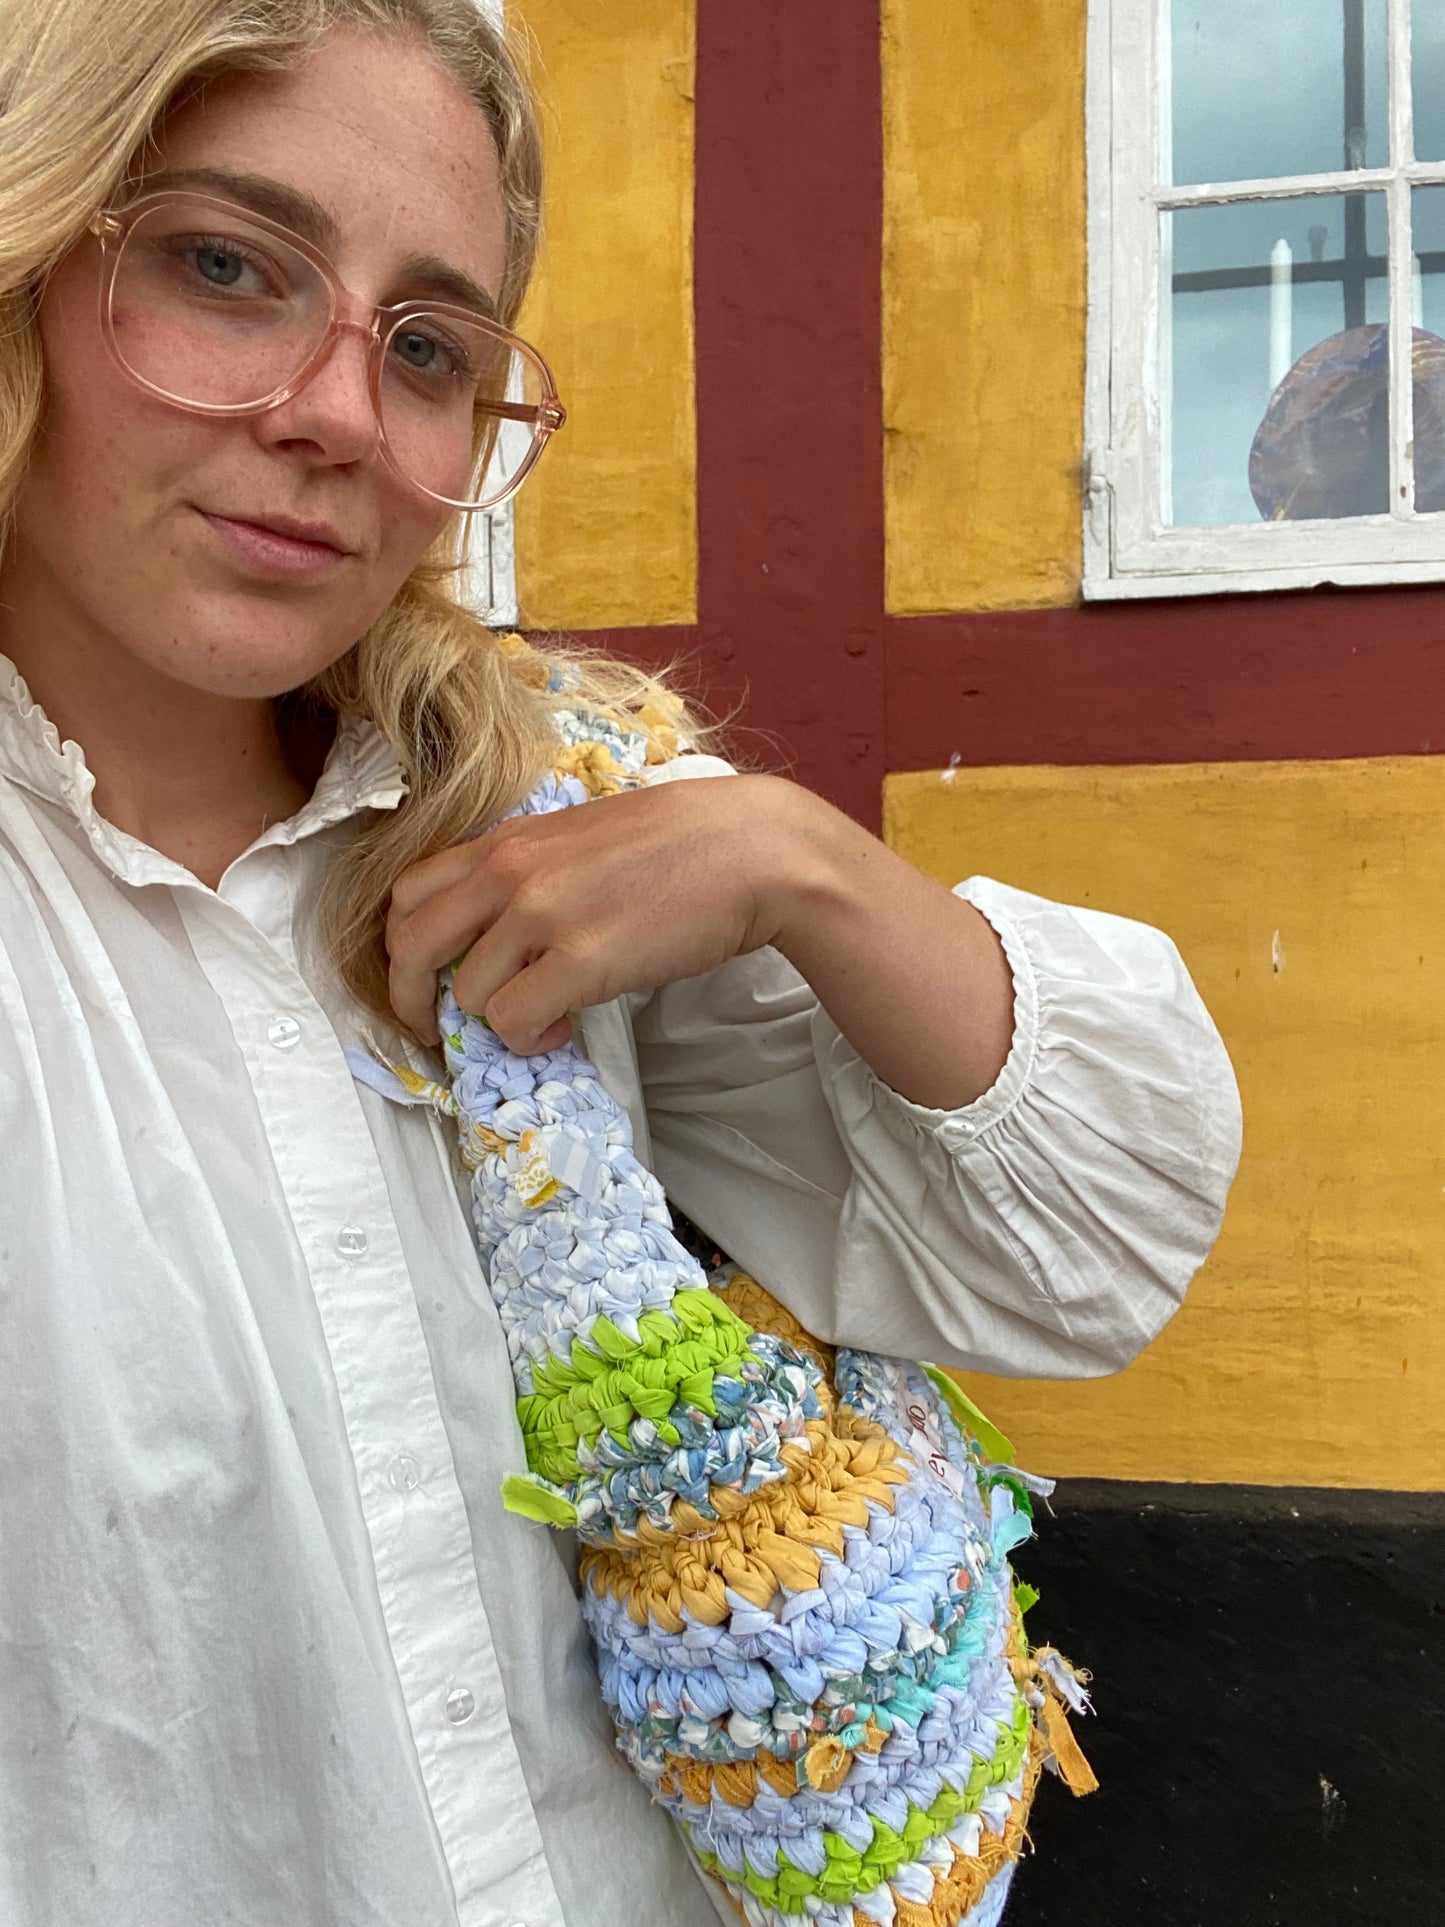 Belle-Tote Bag // Crochet pattern